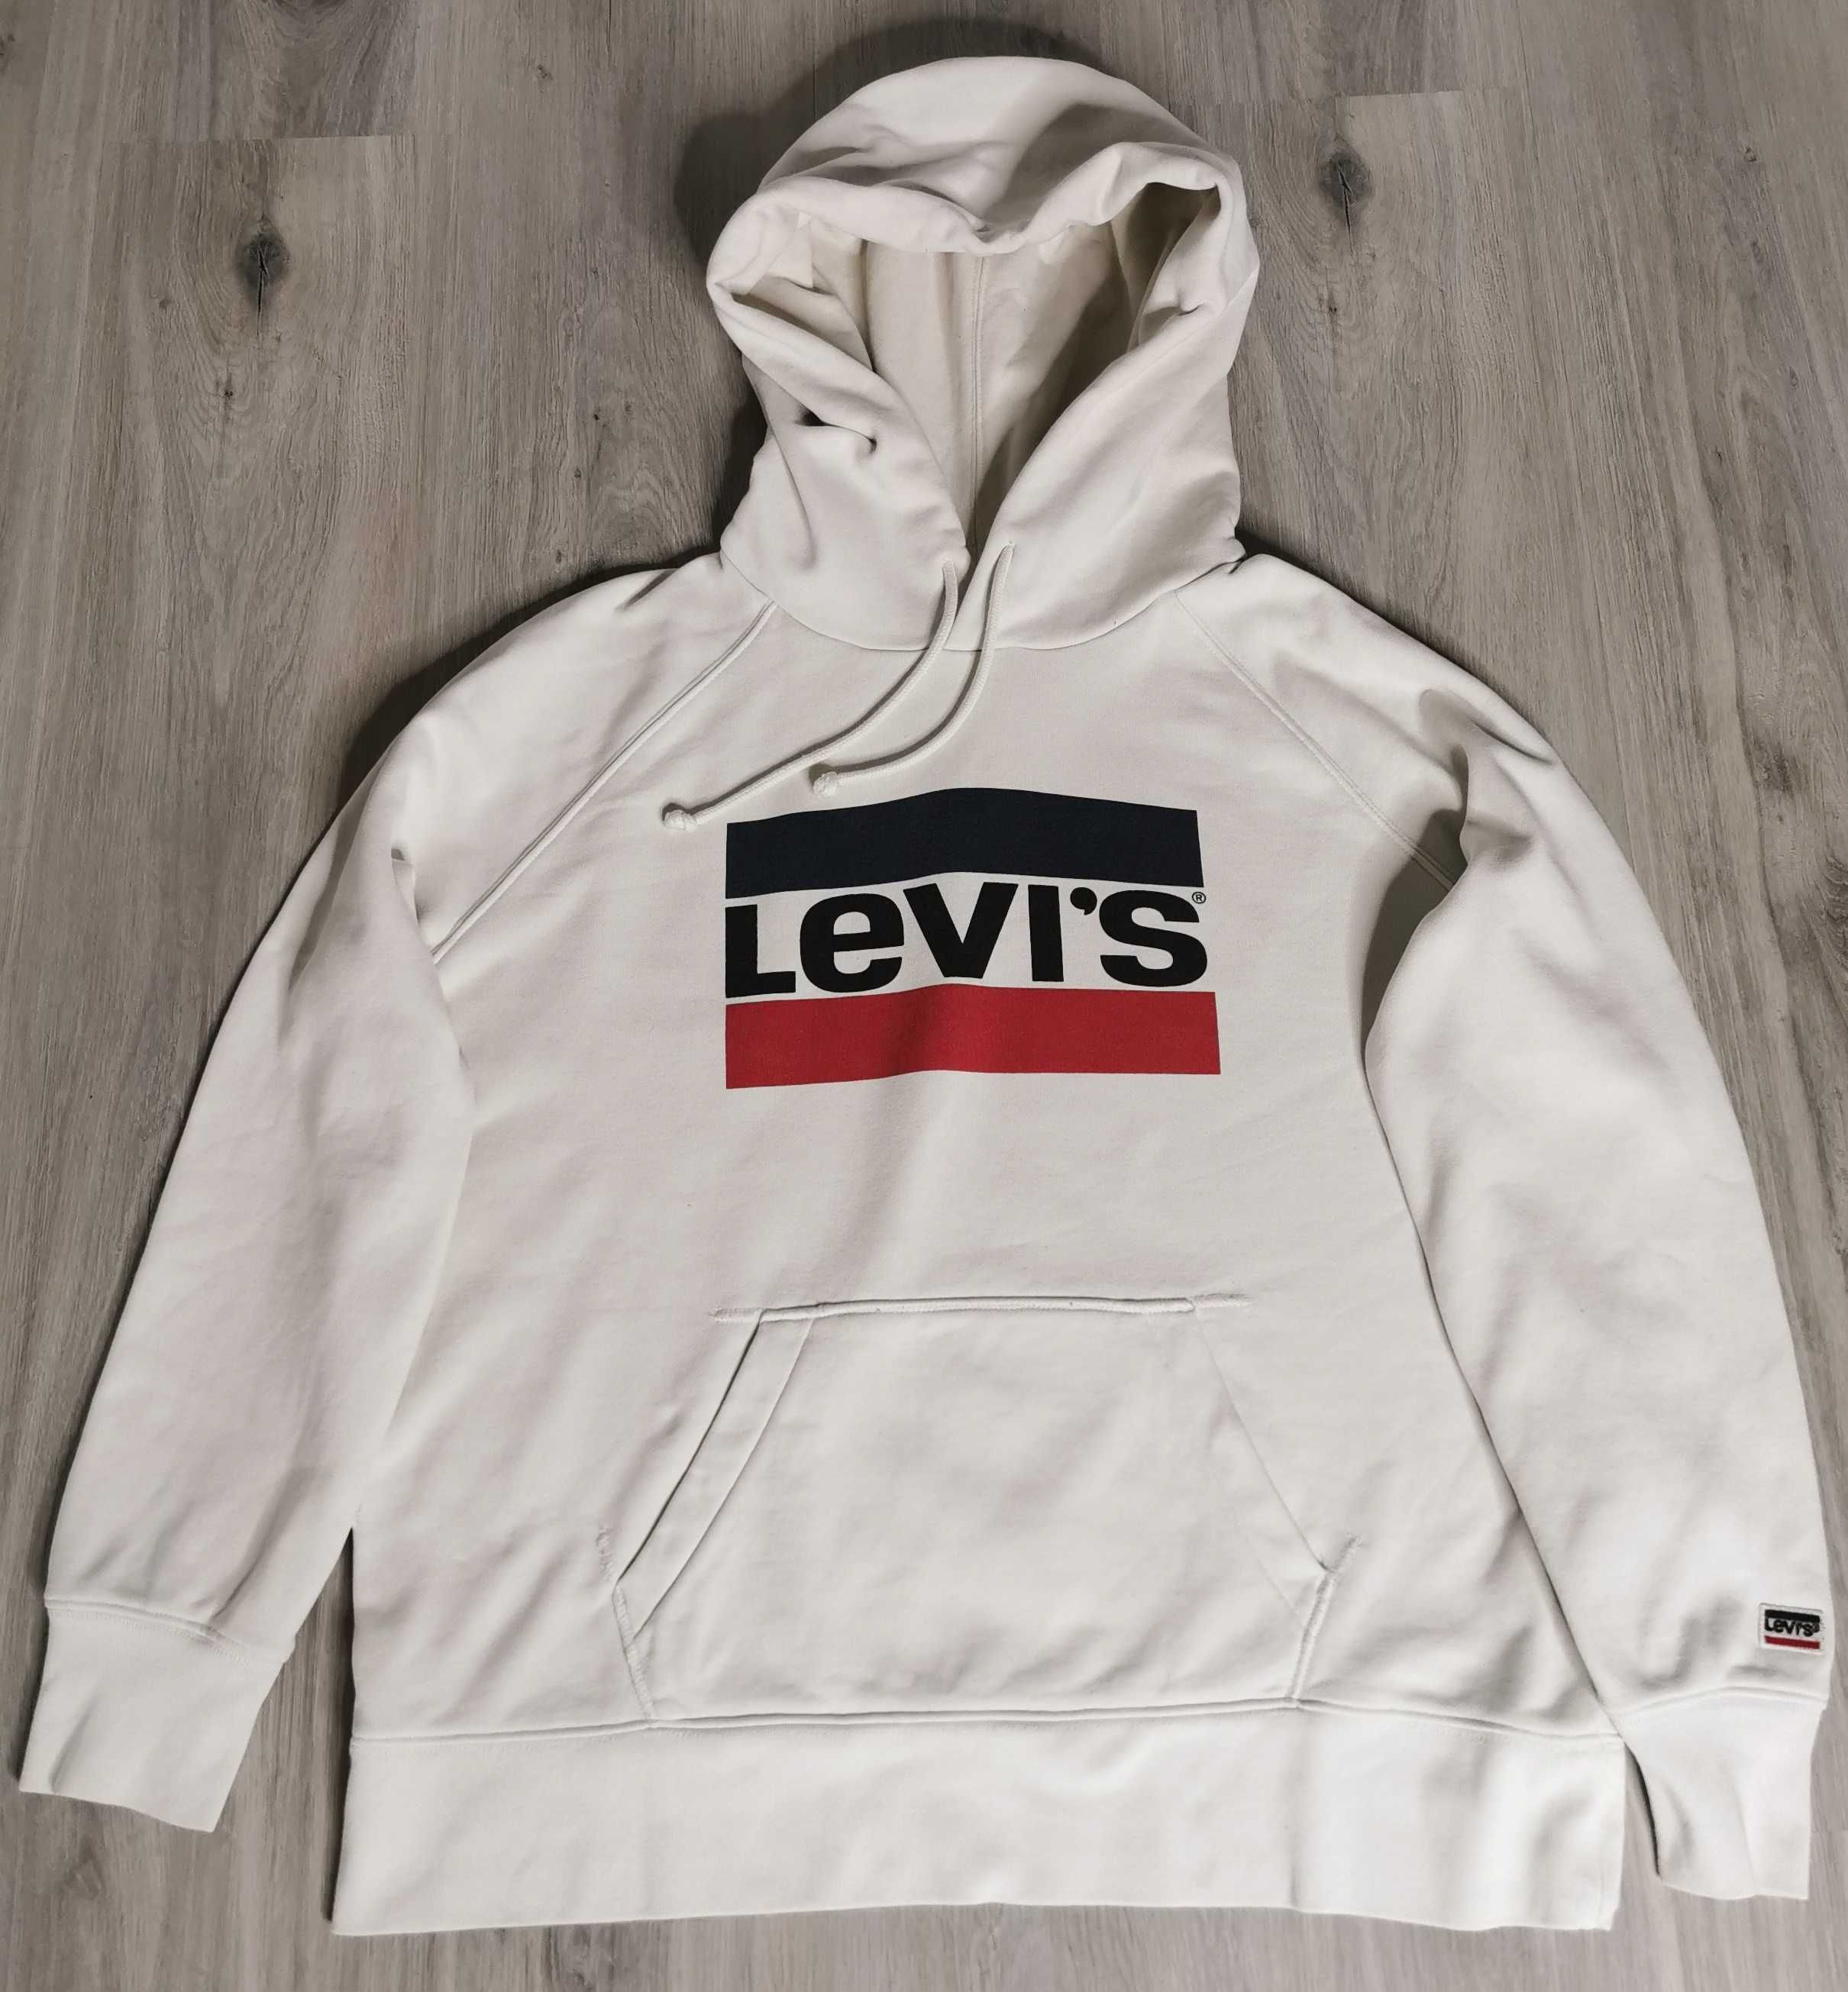 Bluza z kapturem Levi's big print duże logo levis rozmiar M/L